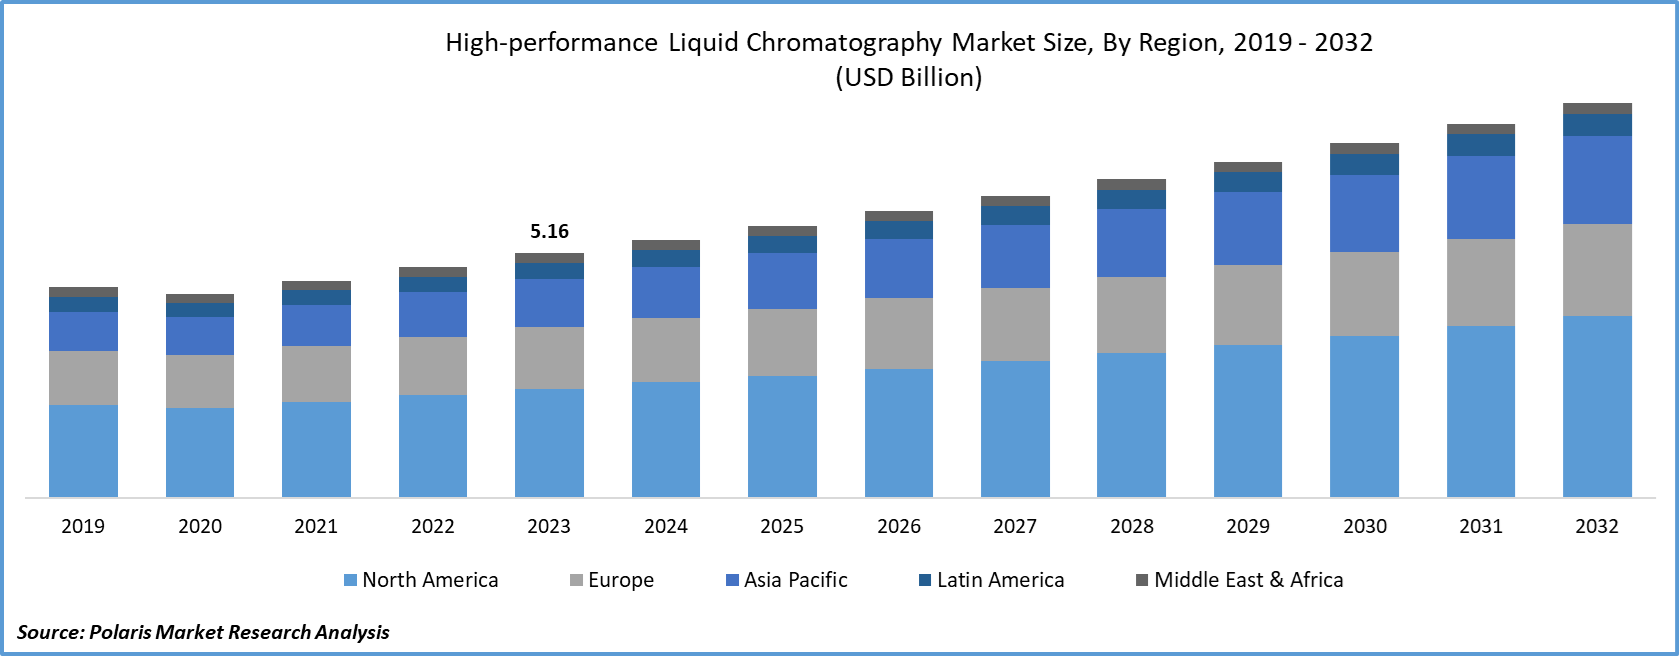 High-performance Liquid Chromatography Market Size